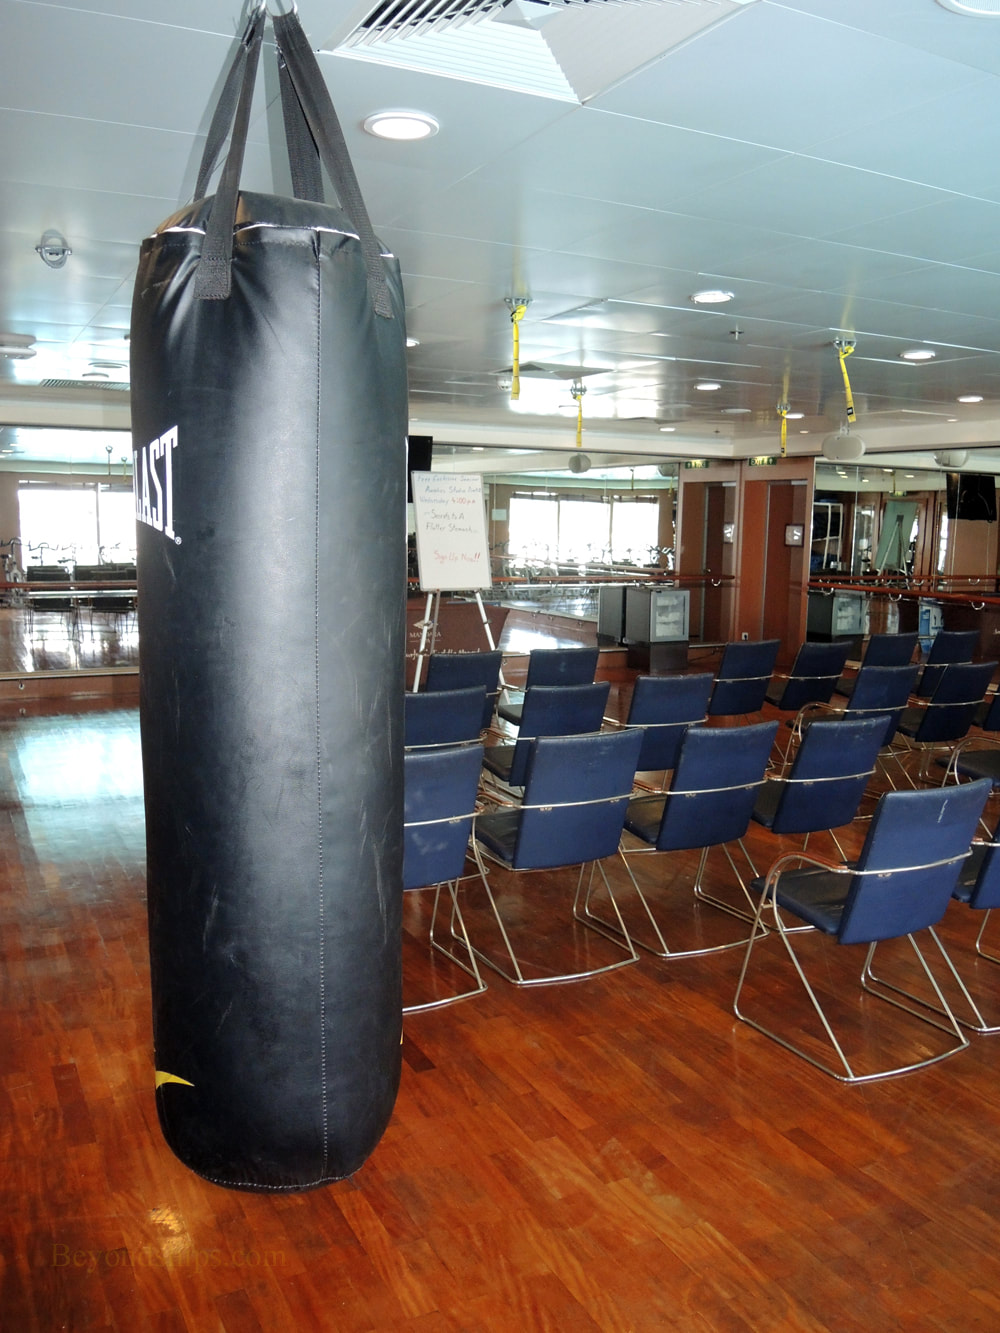 Norwegian Jade cruise ship, fitness center